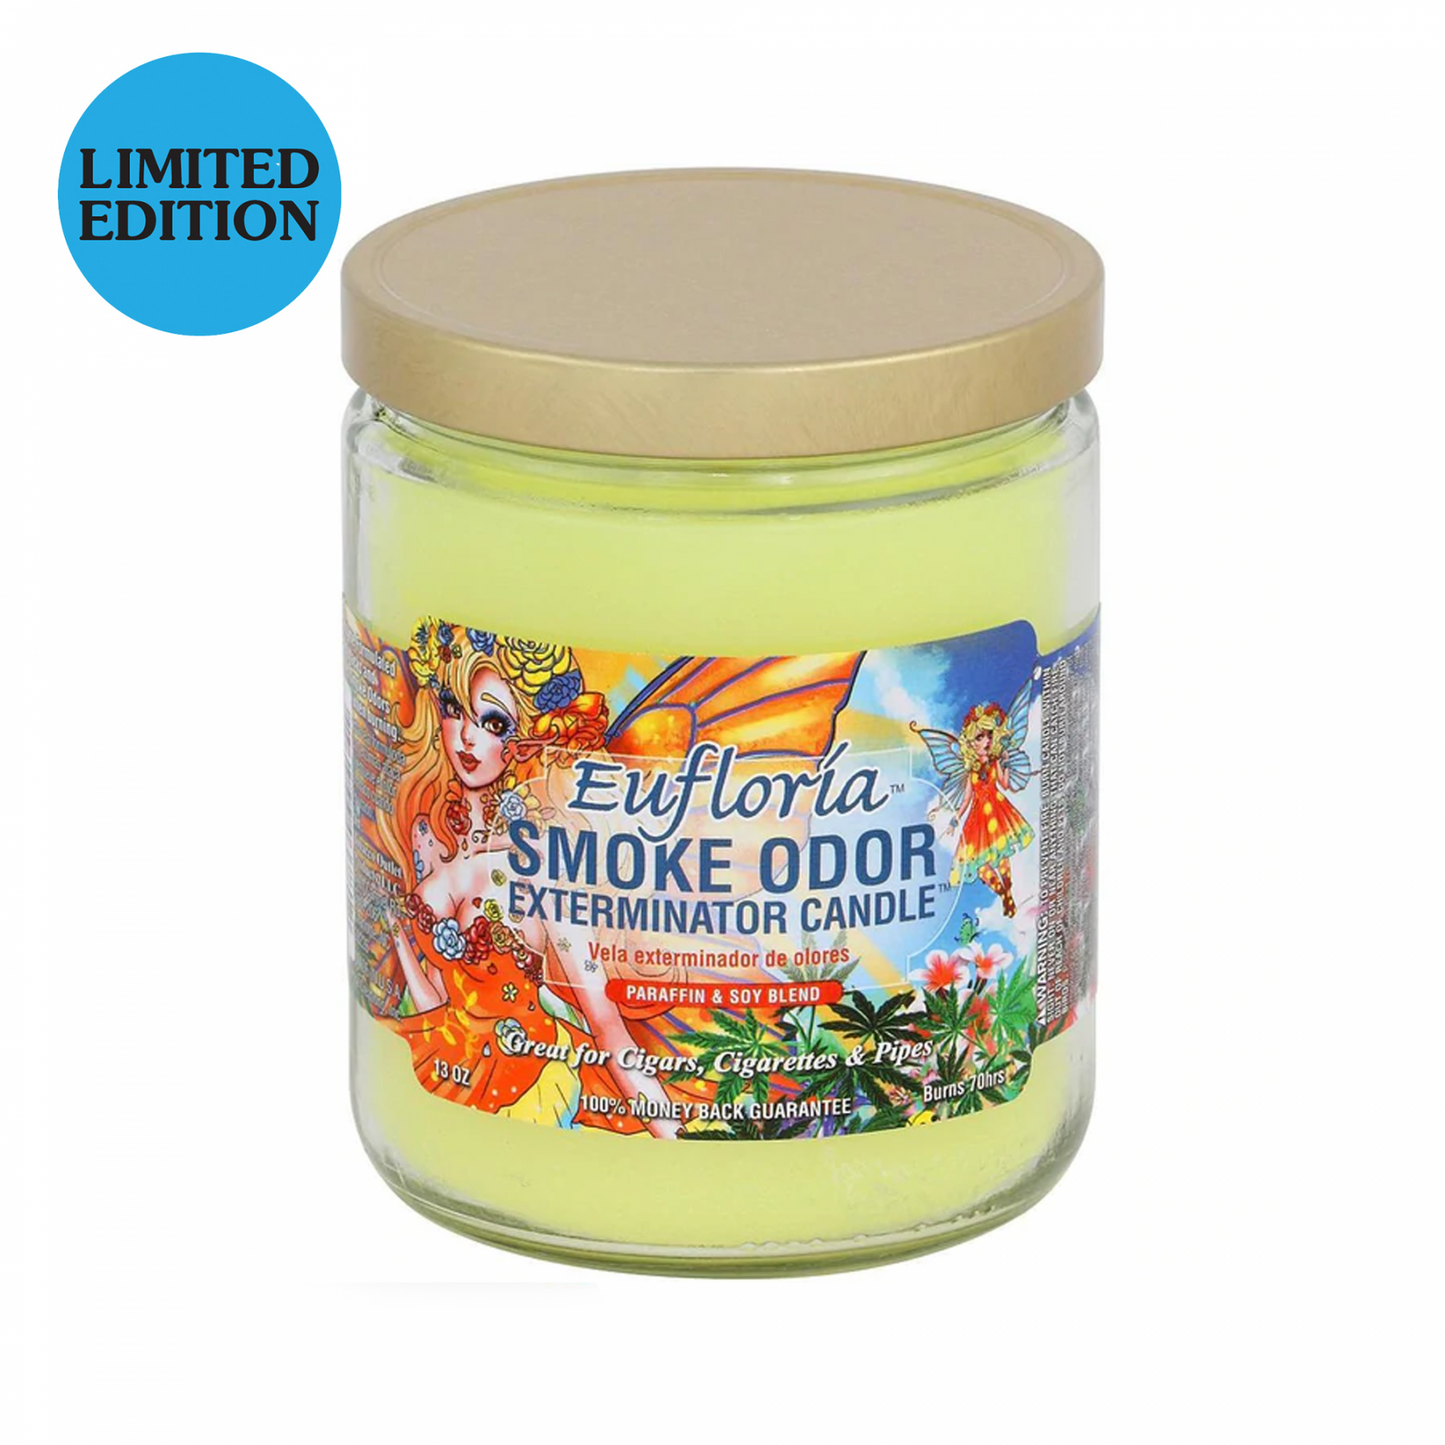 Eufloria Limited Edition Smoke Odor Candle